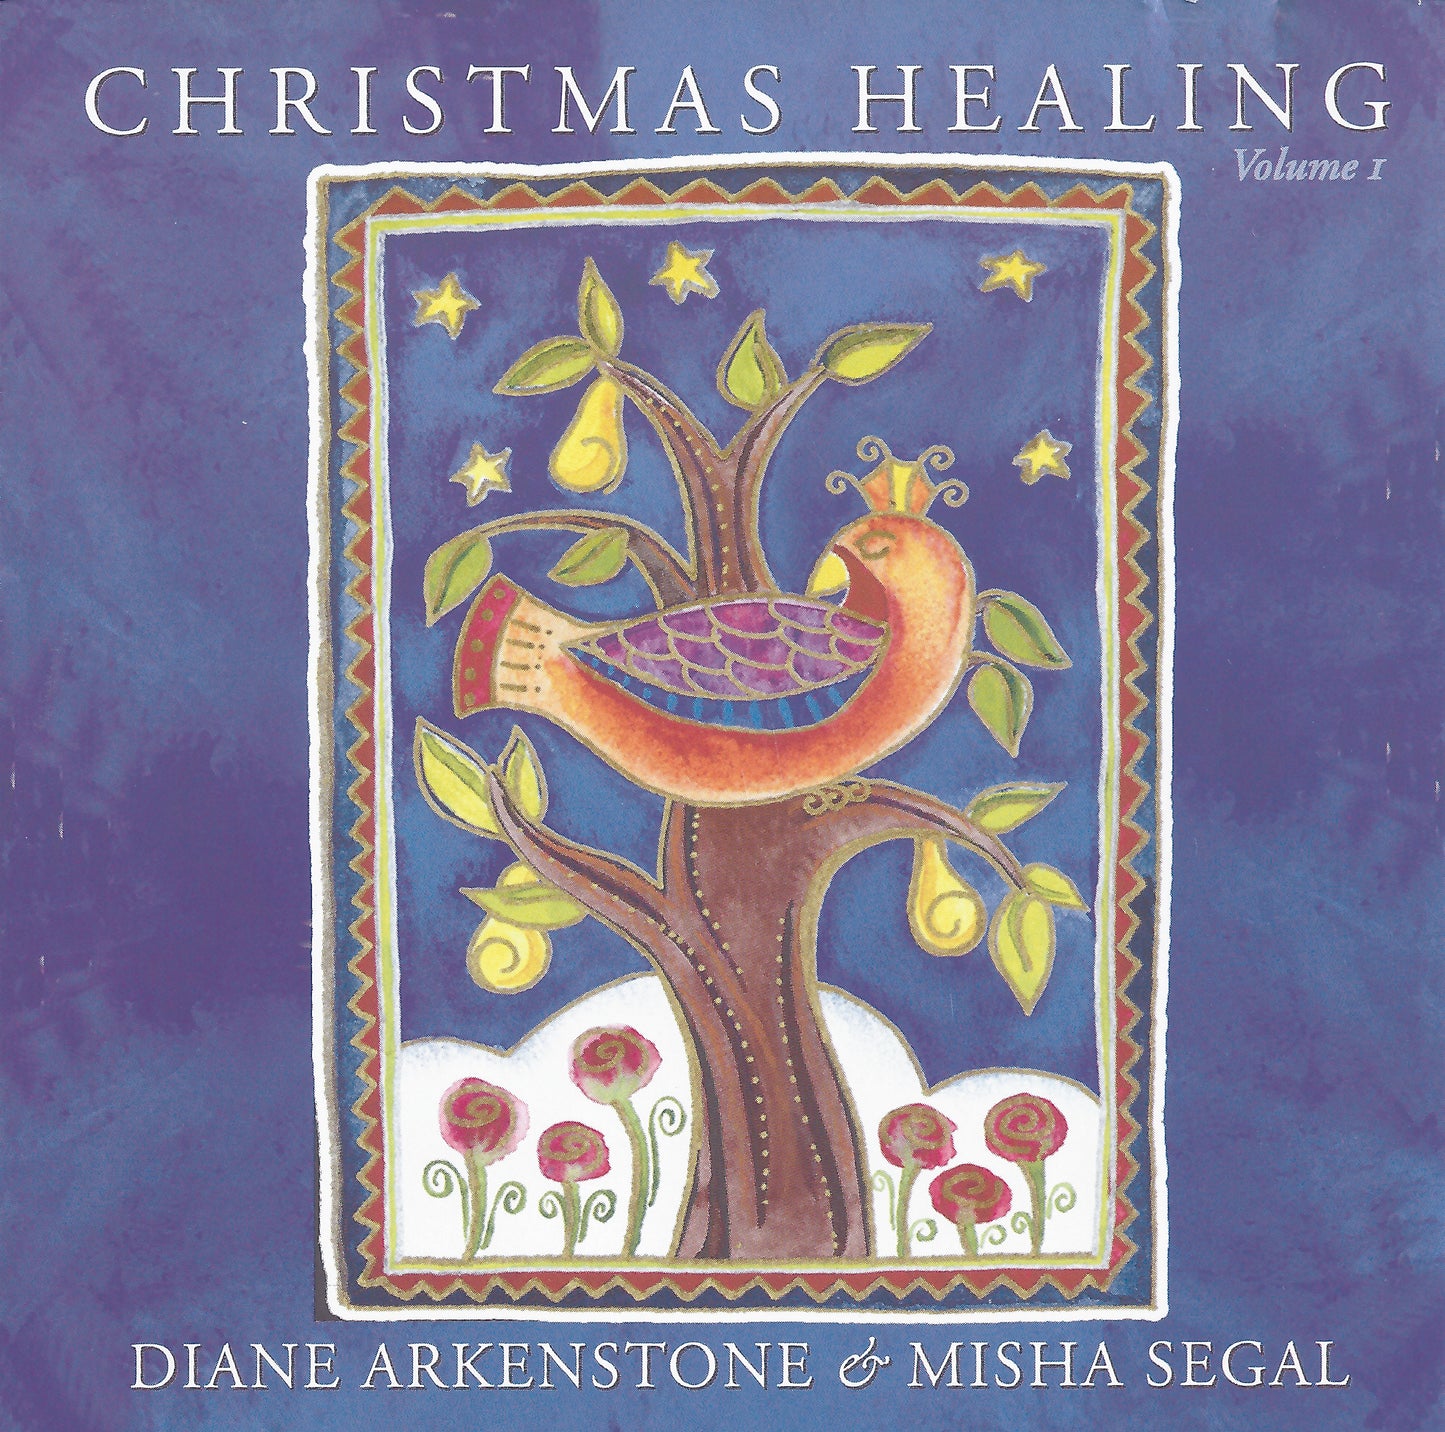 Angels We Have Heard on High - Diane Arkenstone & Misha Segal